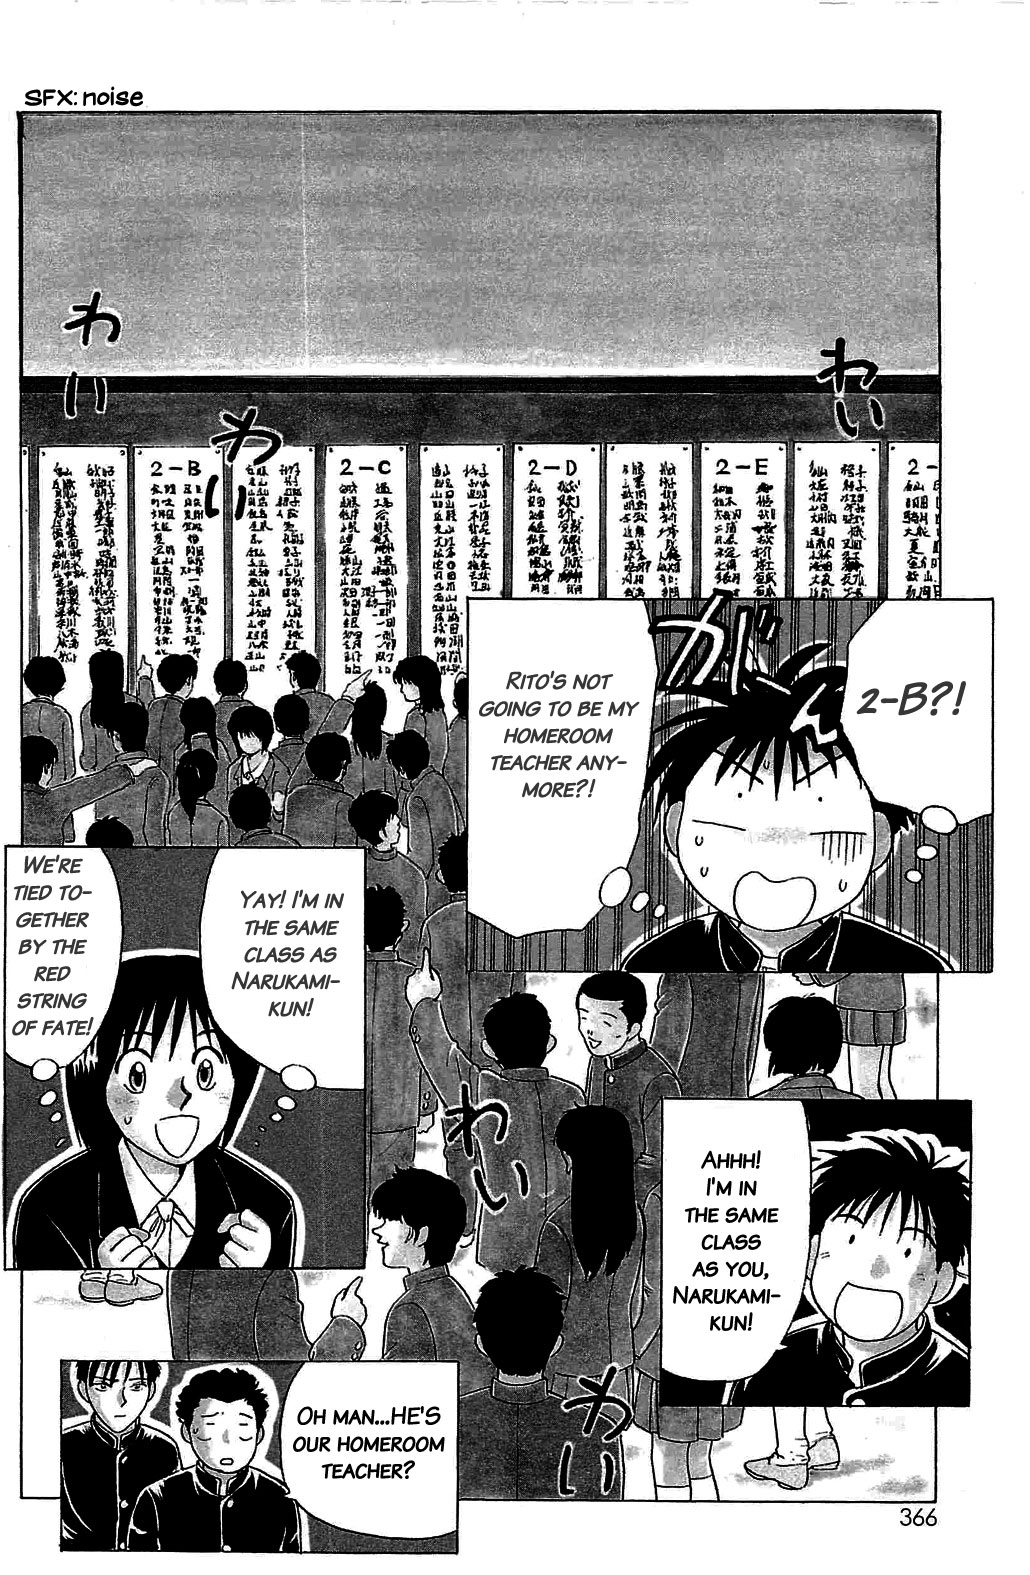 Hisoka Returns - Page 3